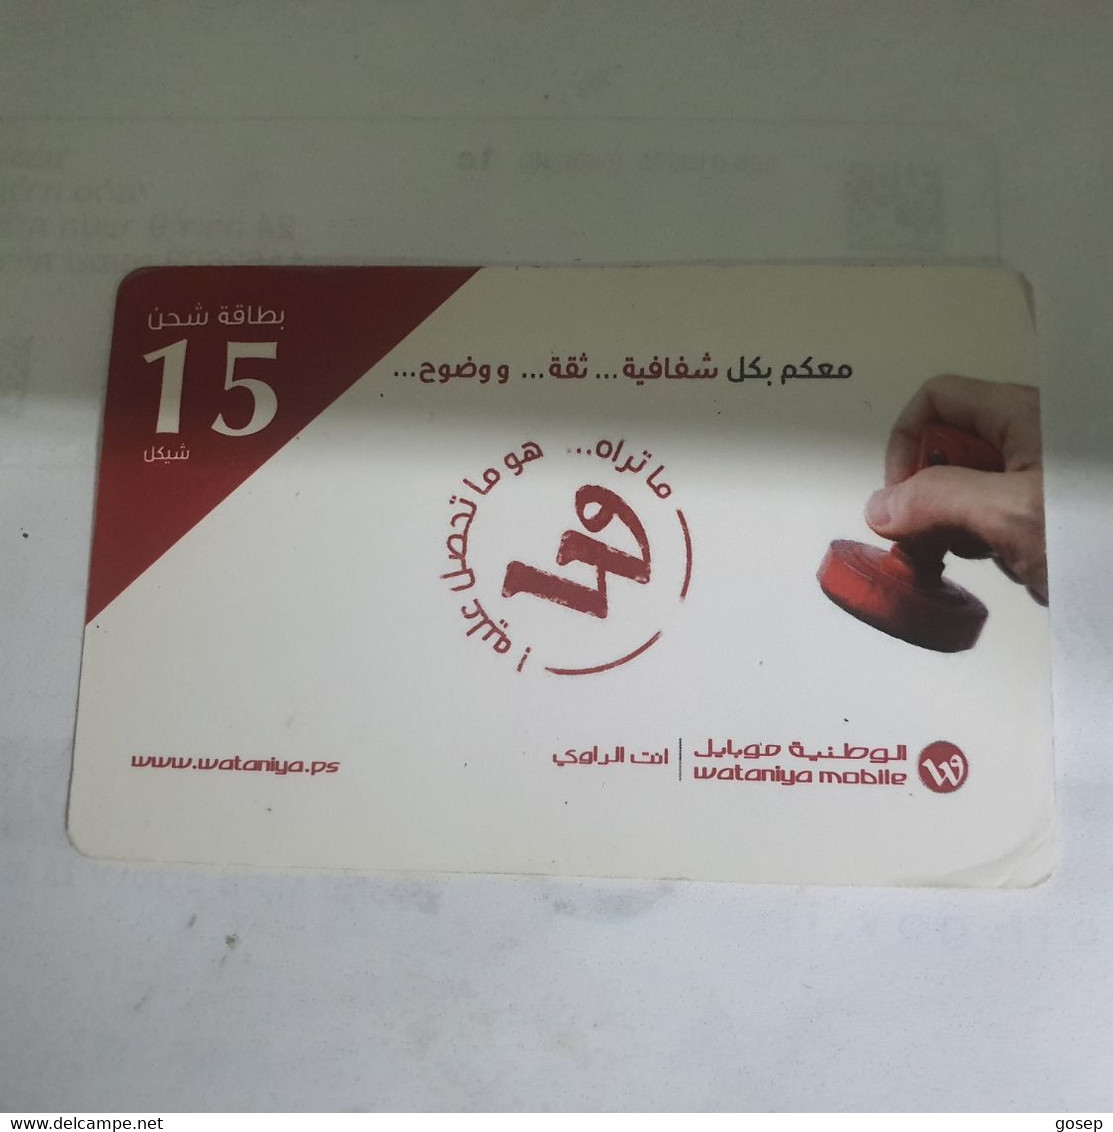 PALESTINE-(PS-WAT-REF-0005C)-Mobile 15-(380)-(9811-2831-5205-3725)-(1/5/2016)used Card+1prepiad Free - Palästina